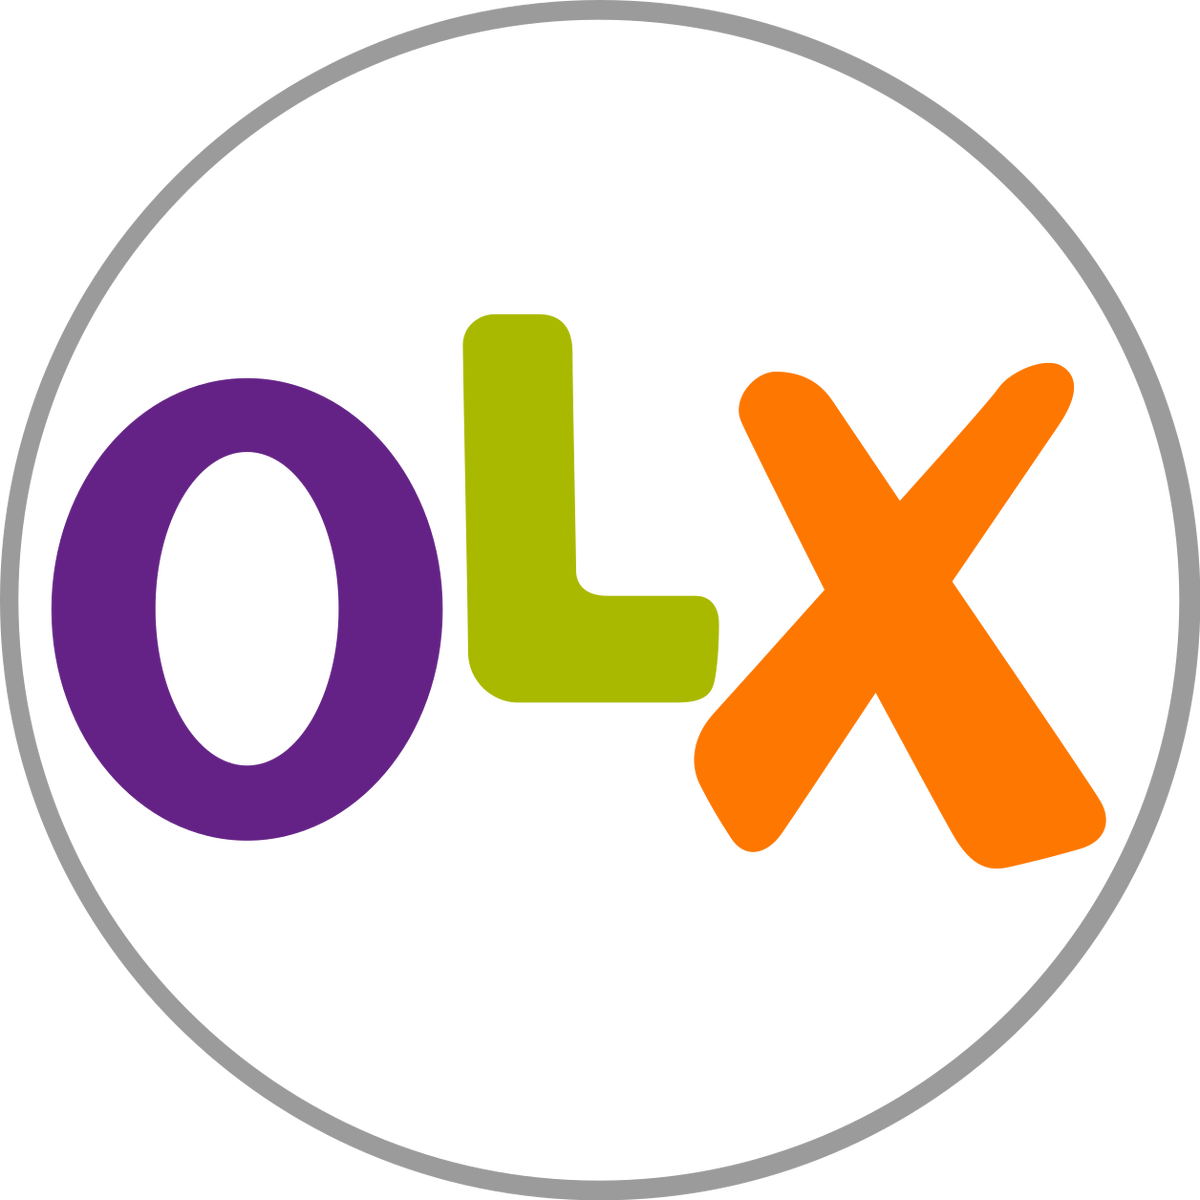 OLX (Eusloida), Logofanonpedia